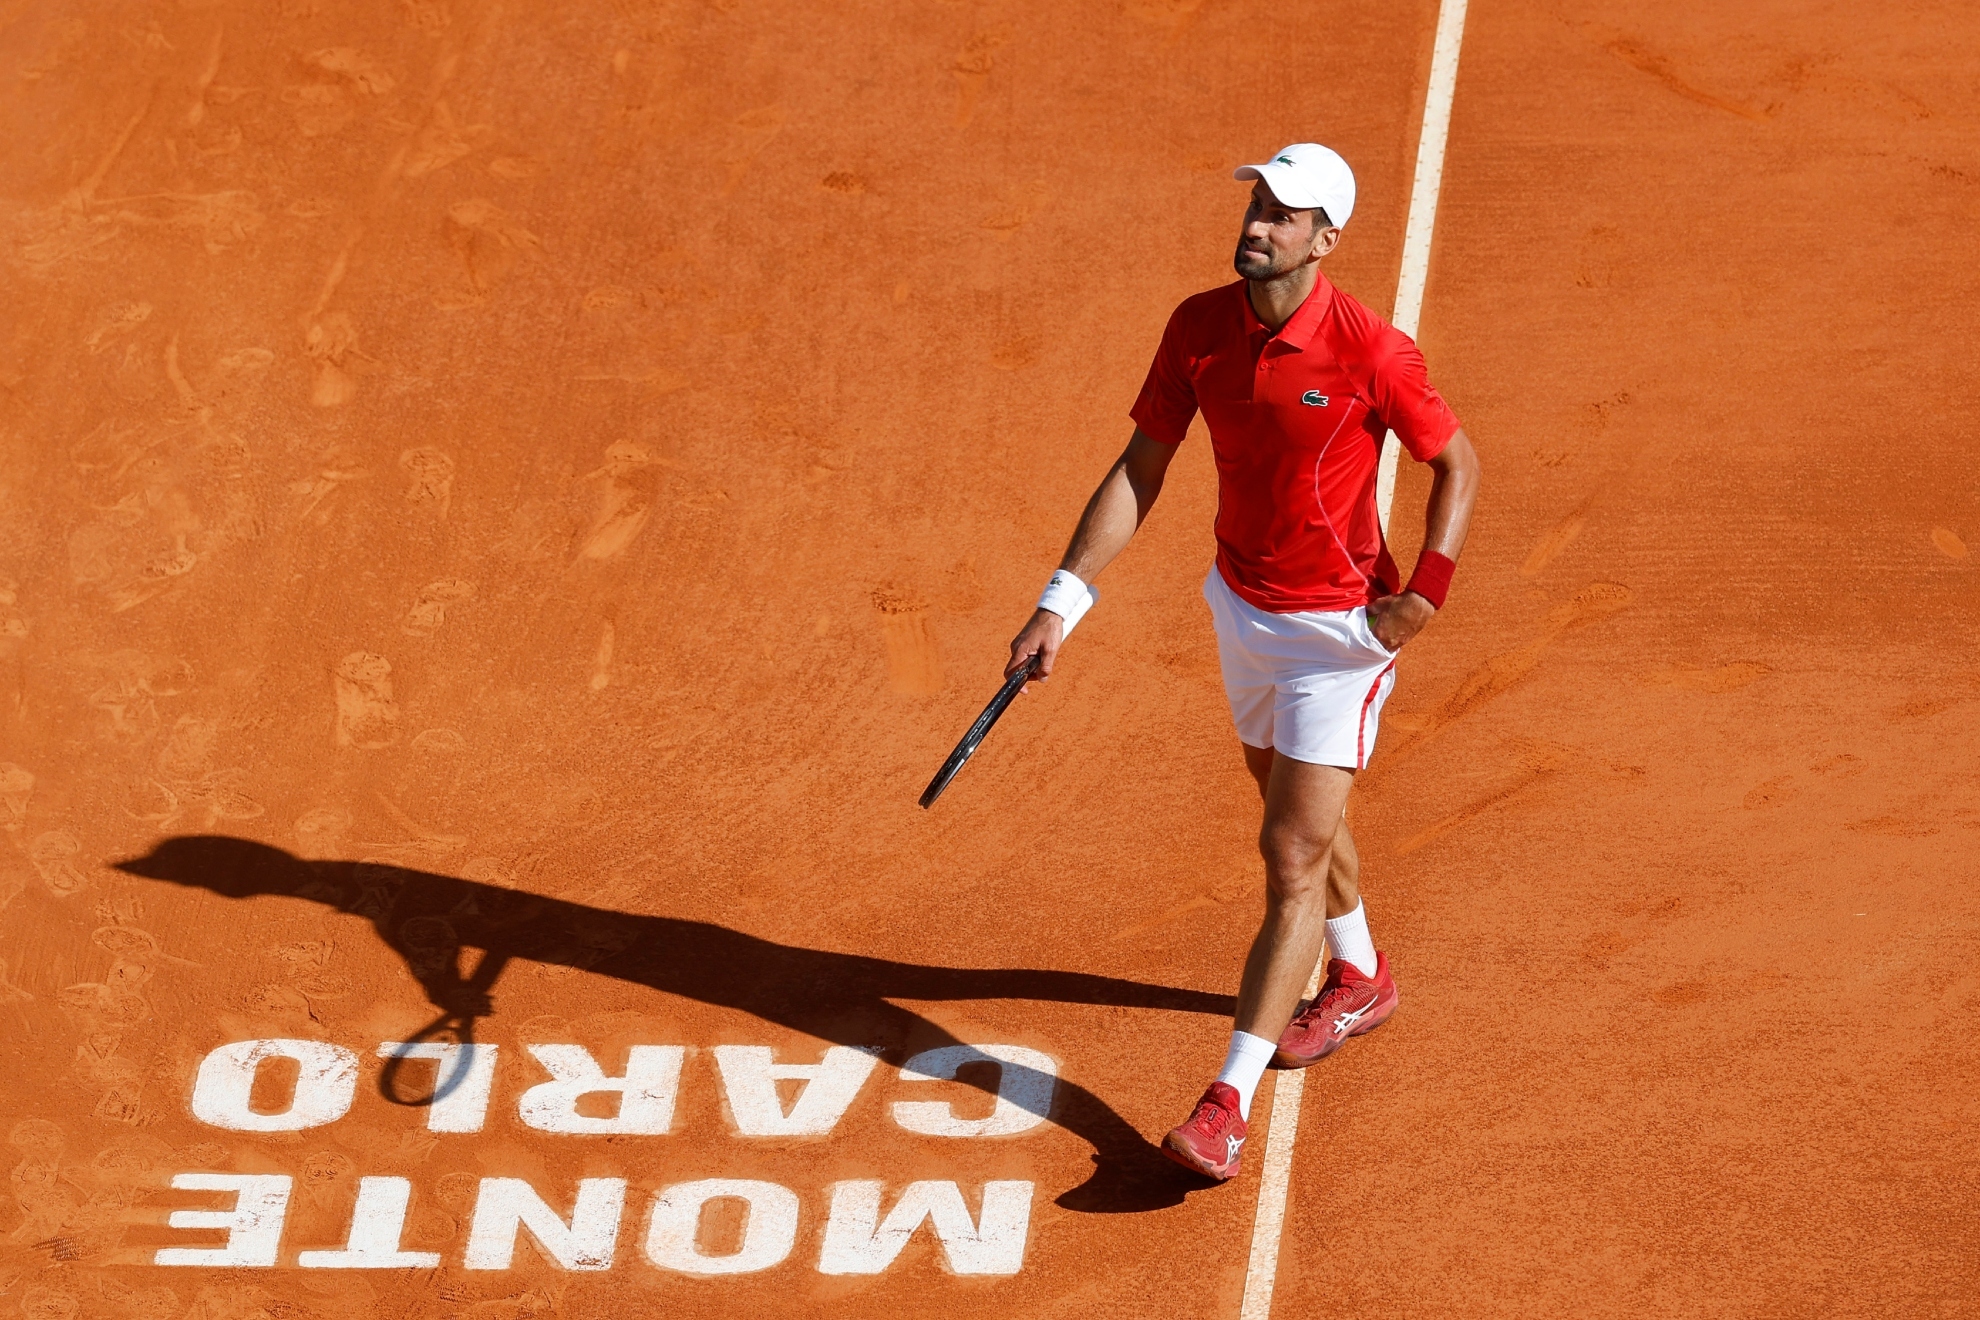 Djokovic during a match